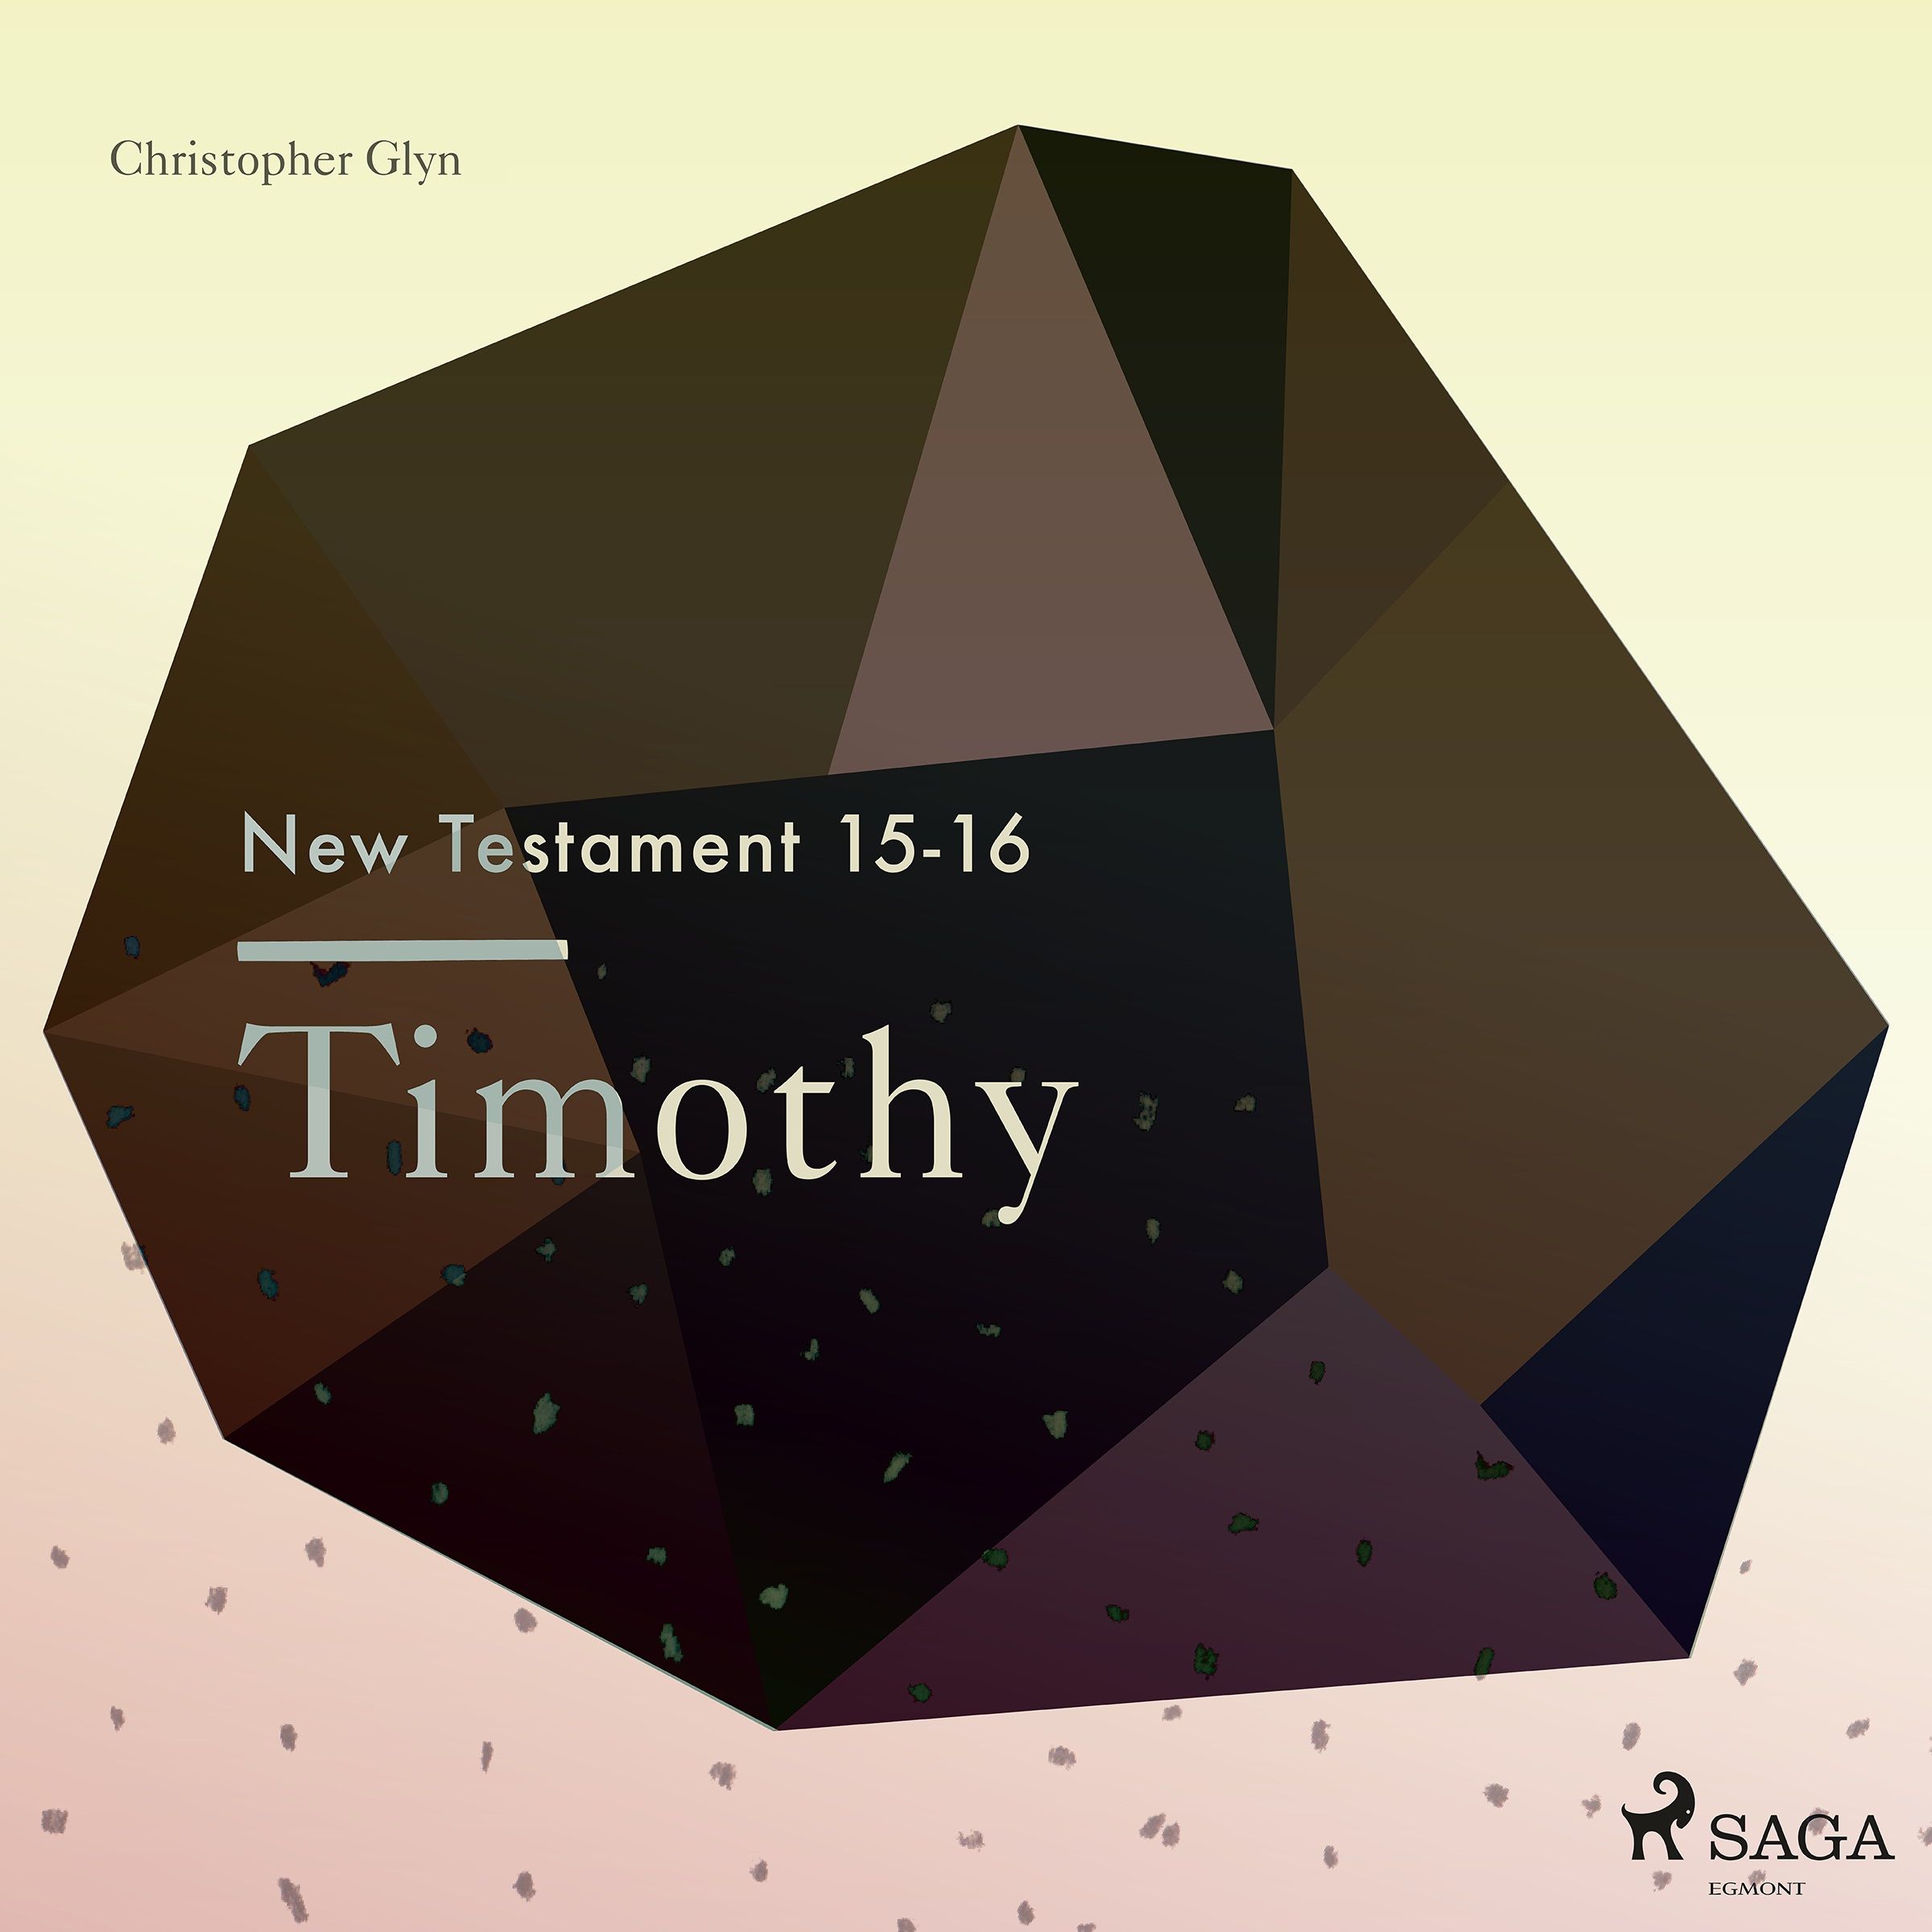 The New Testament 15-16 - Timothy, ljudbok av Christopher Glyn